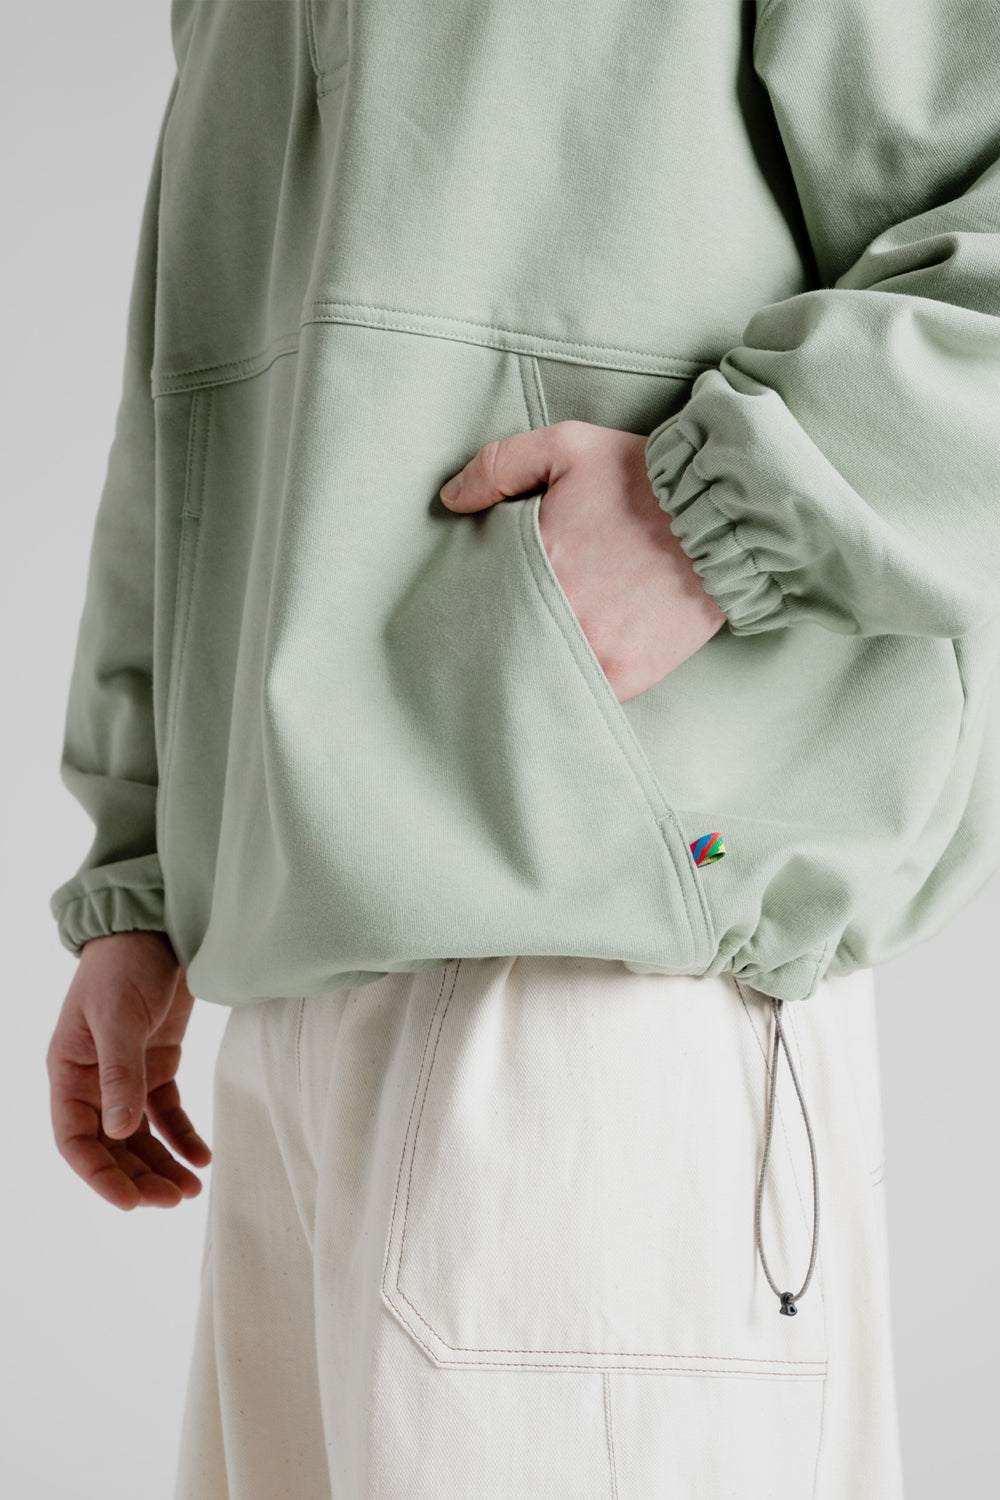 Is-Ness Pullover Sweatshirt in Mint Gray